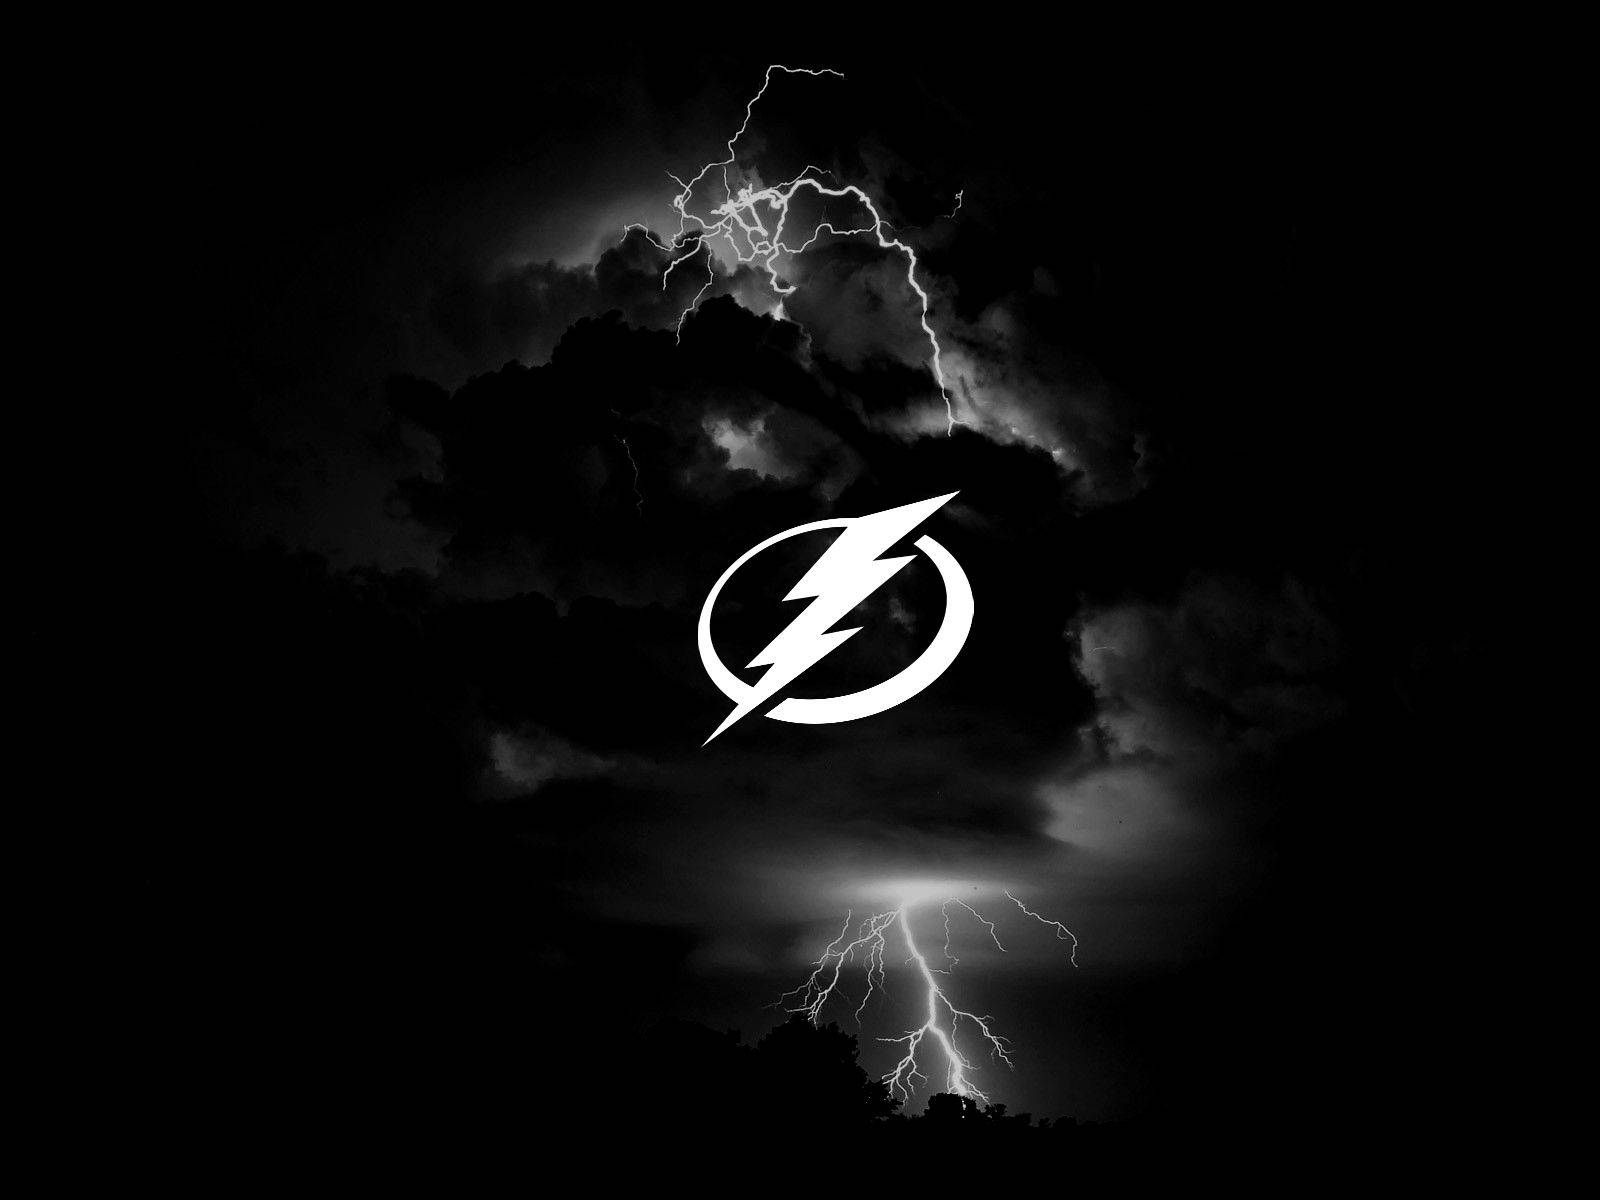 The Flash Lightning Logo Wallpaper